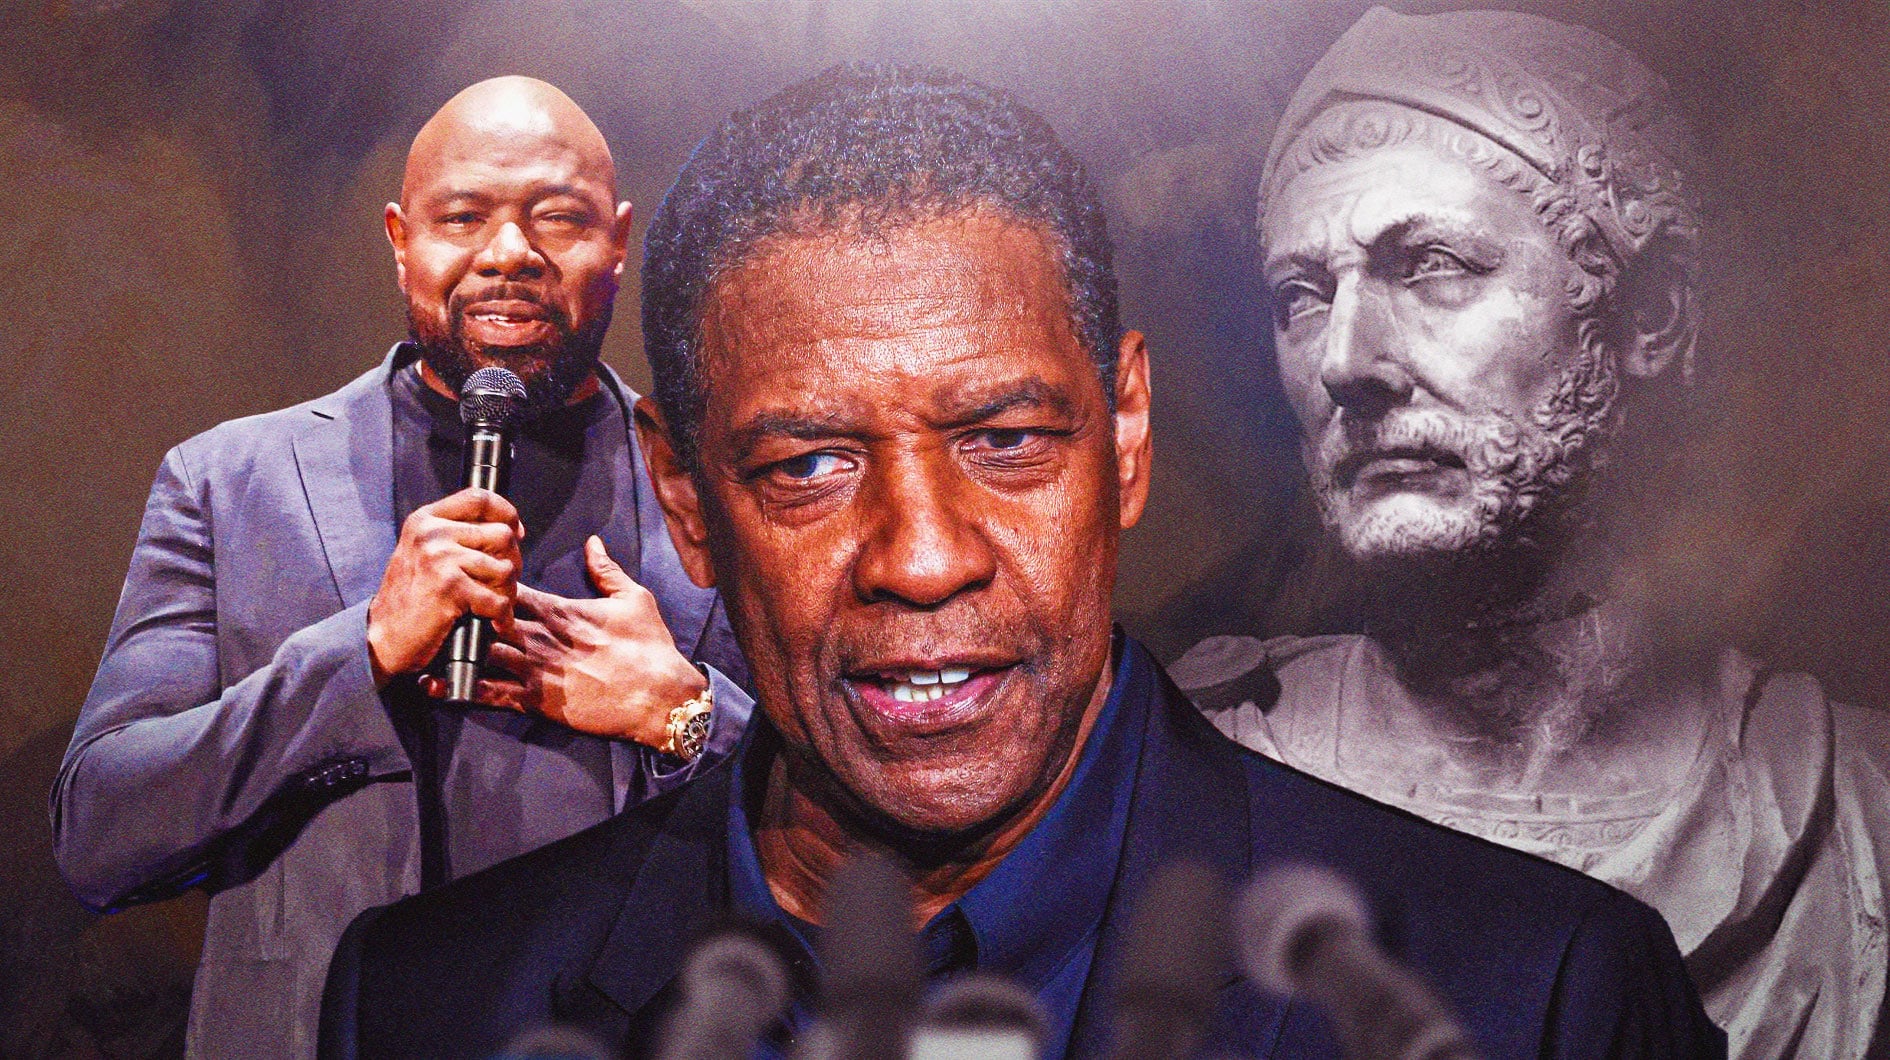 Antoine Fuqua and Denzel Washington next to bust of Hannibal.